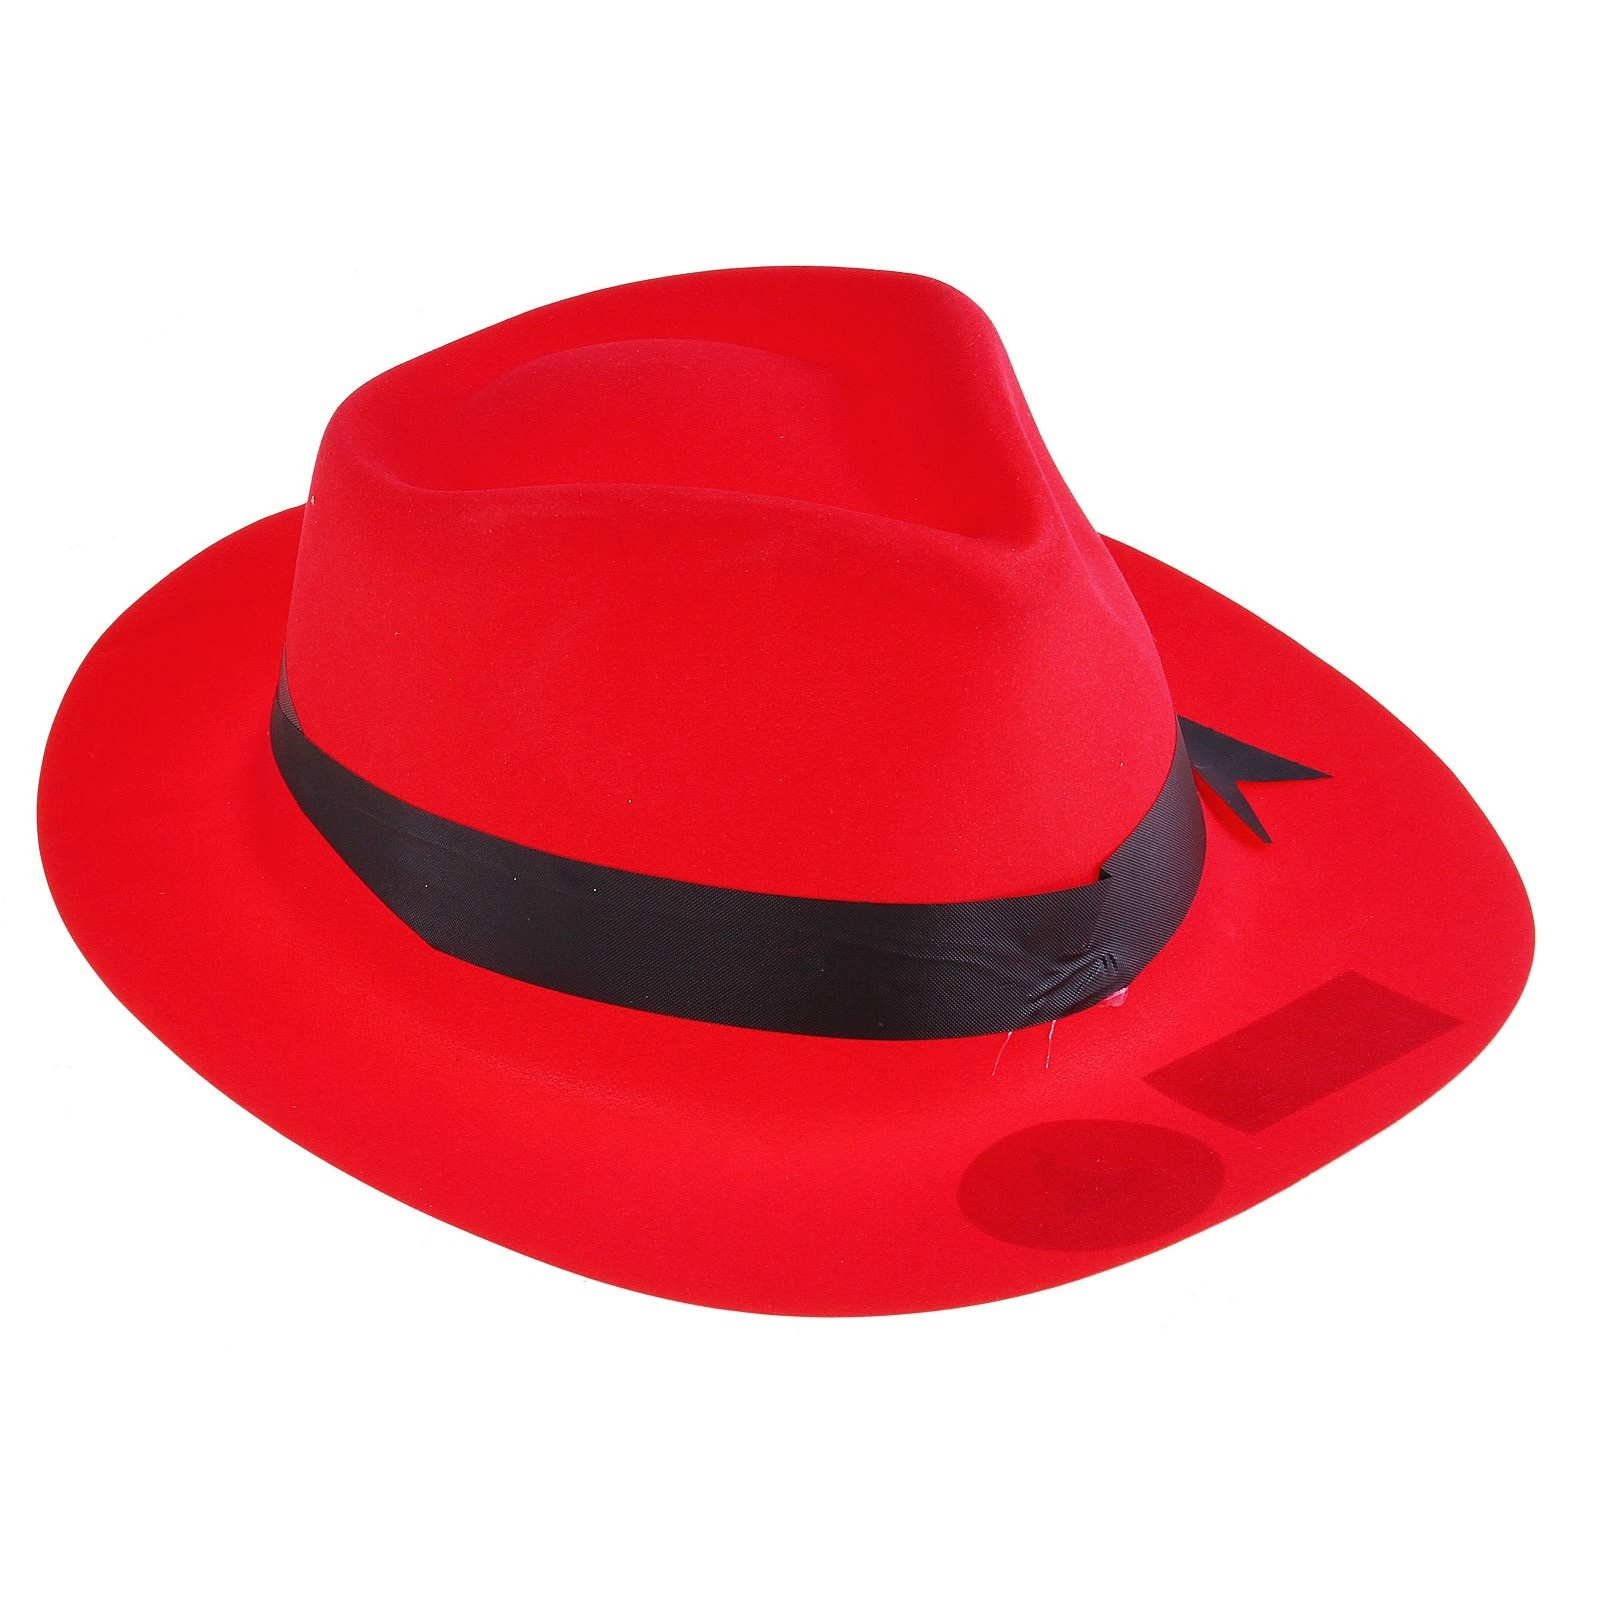 Шляпа 325745 с кантом р.56 цвет: красная - Саранск 